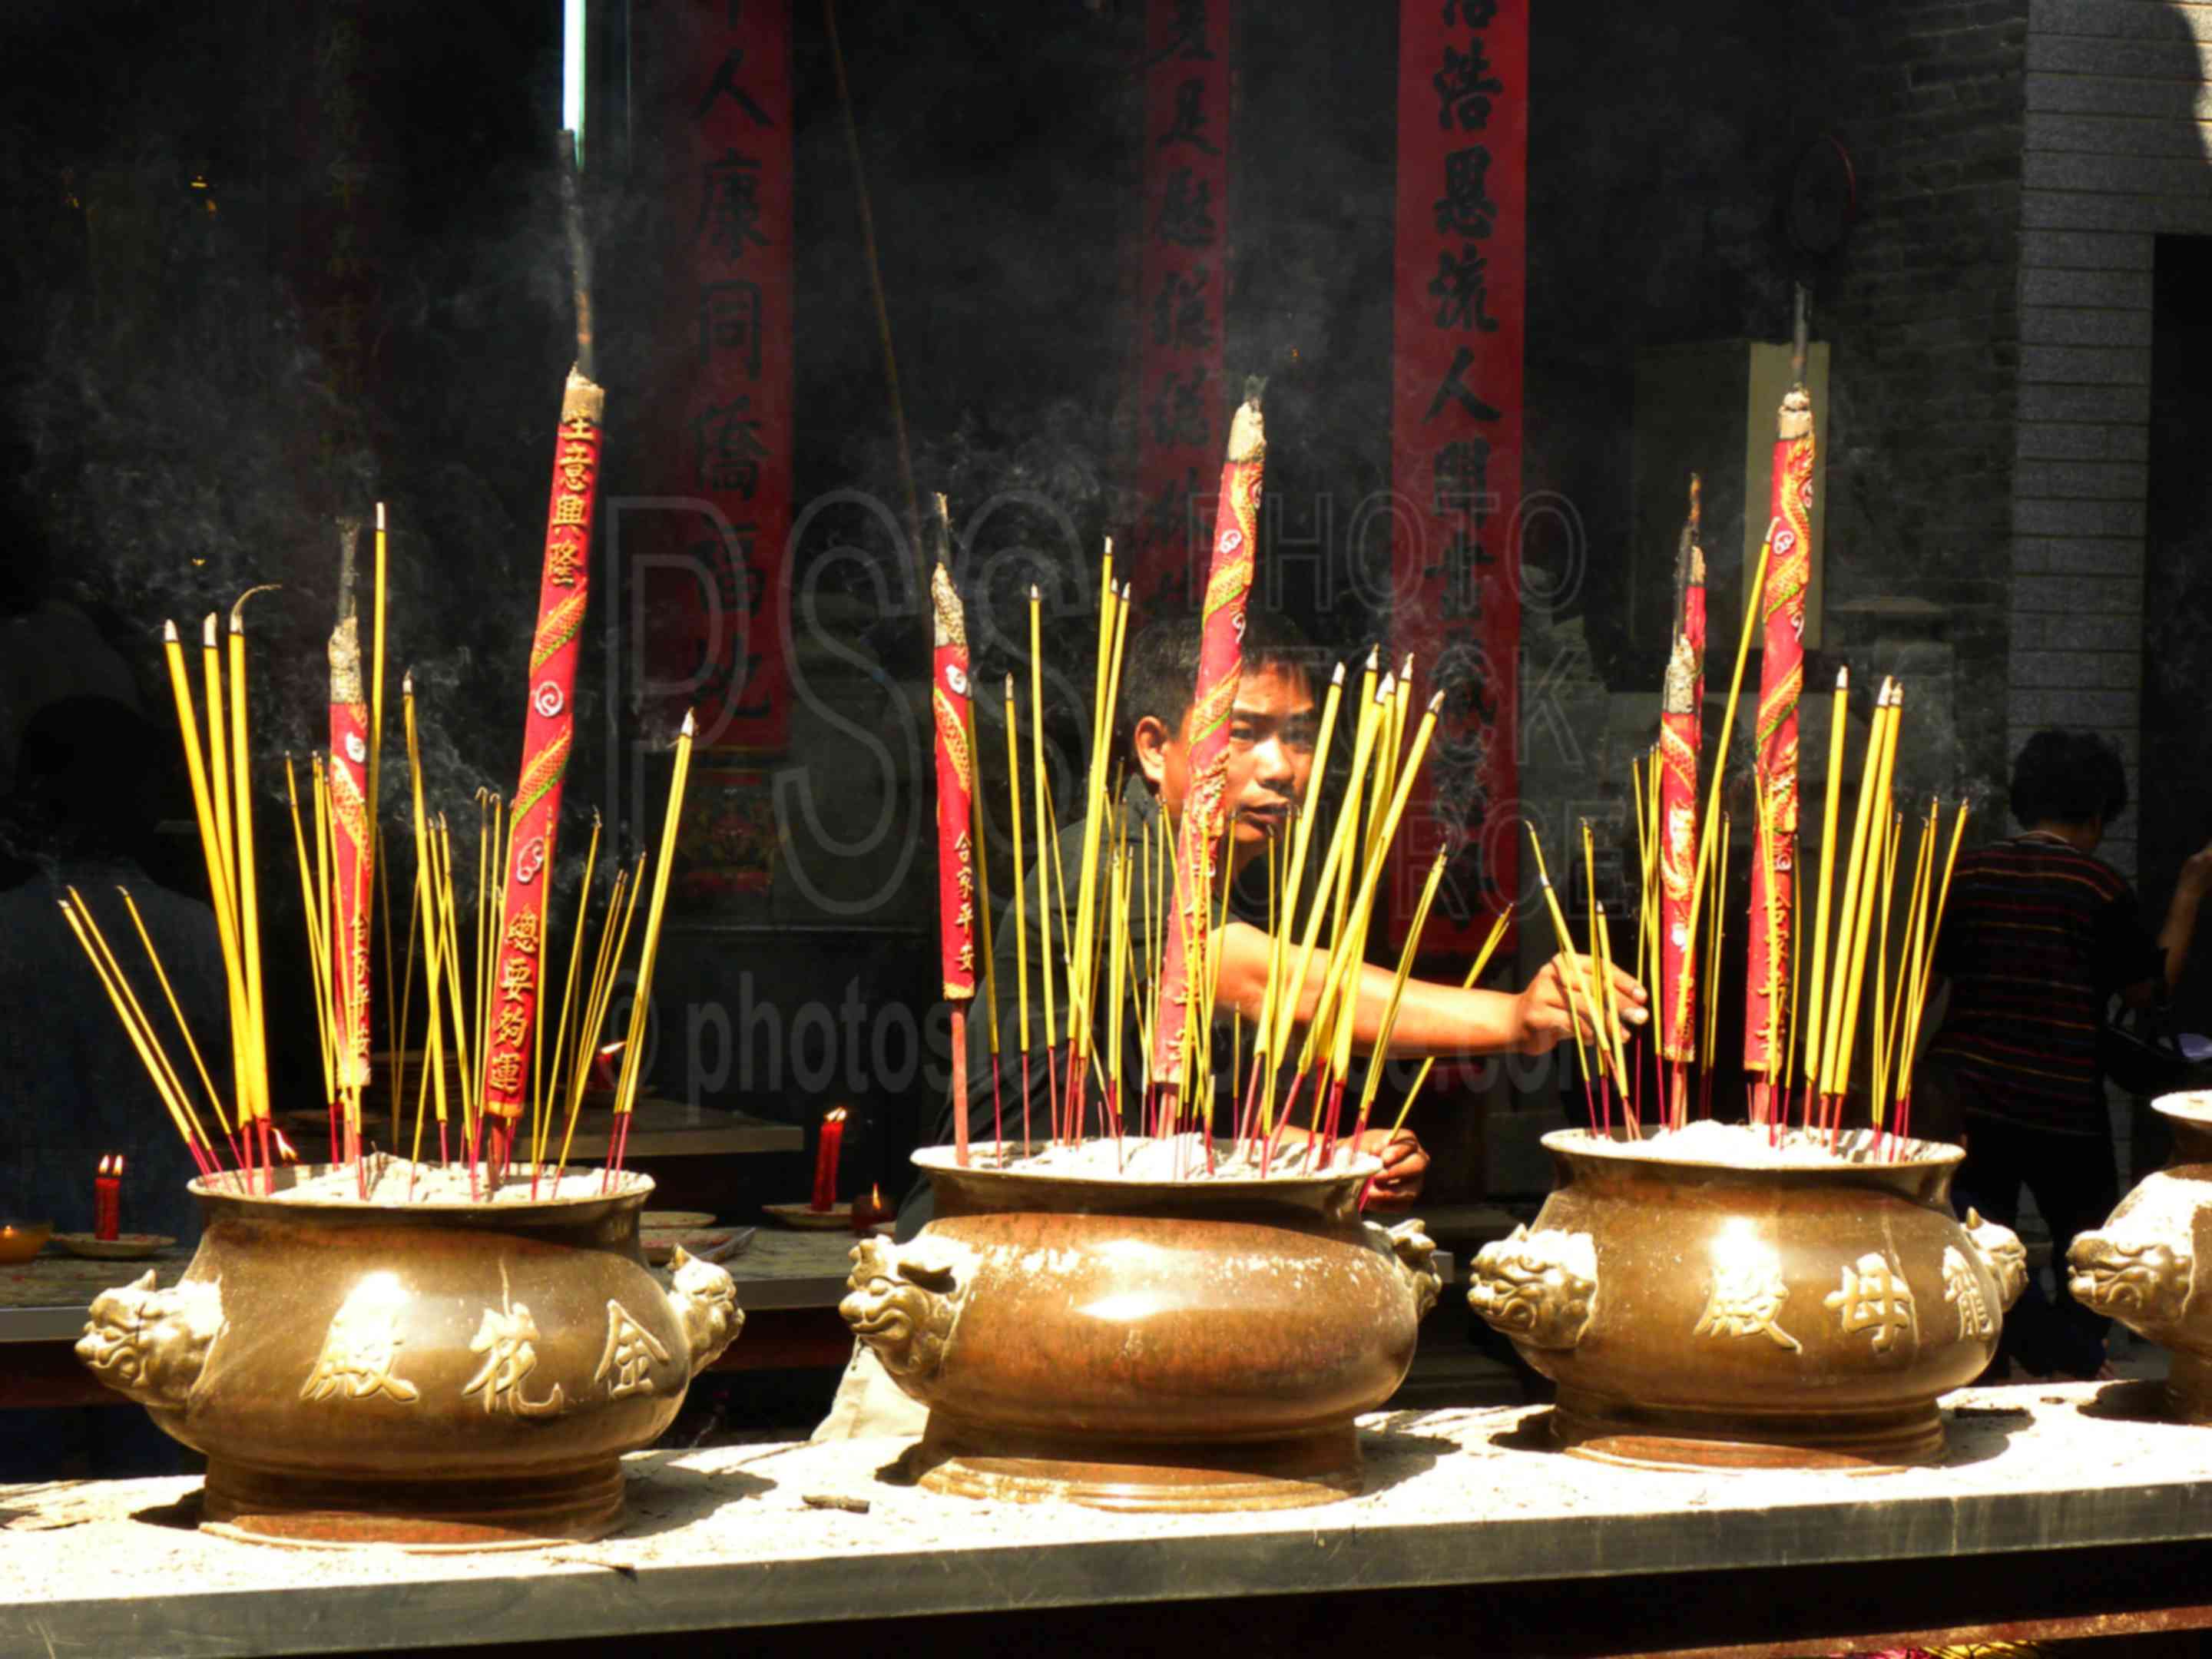 Thien Hau Temple Incense,temple,worship,religious,decoration,prayer,courtyard,incense,smoke,people